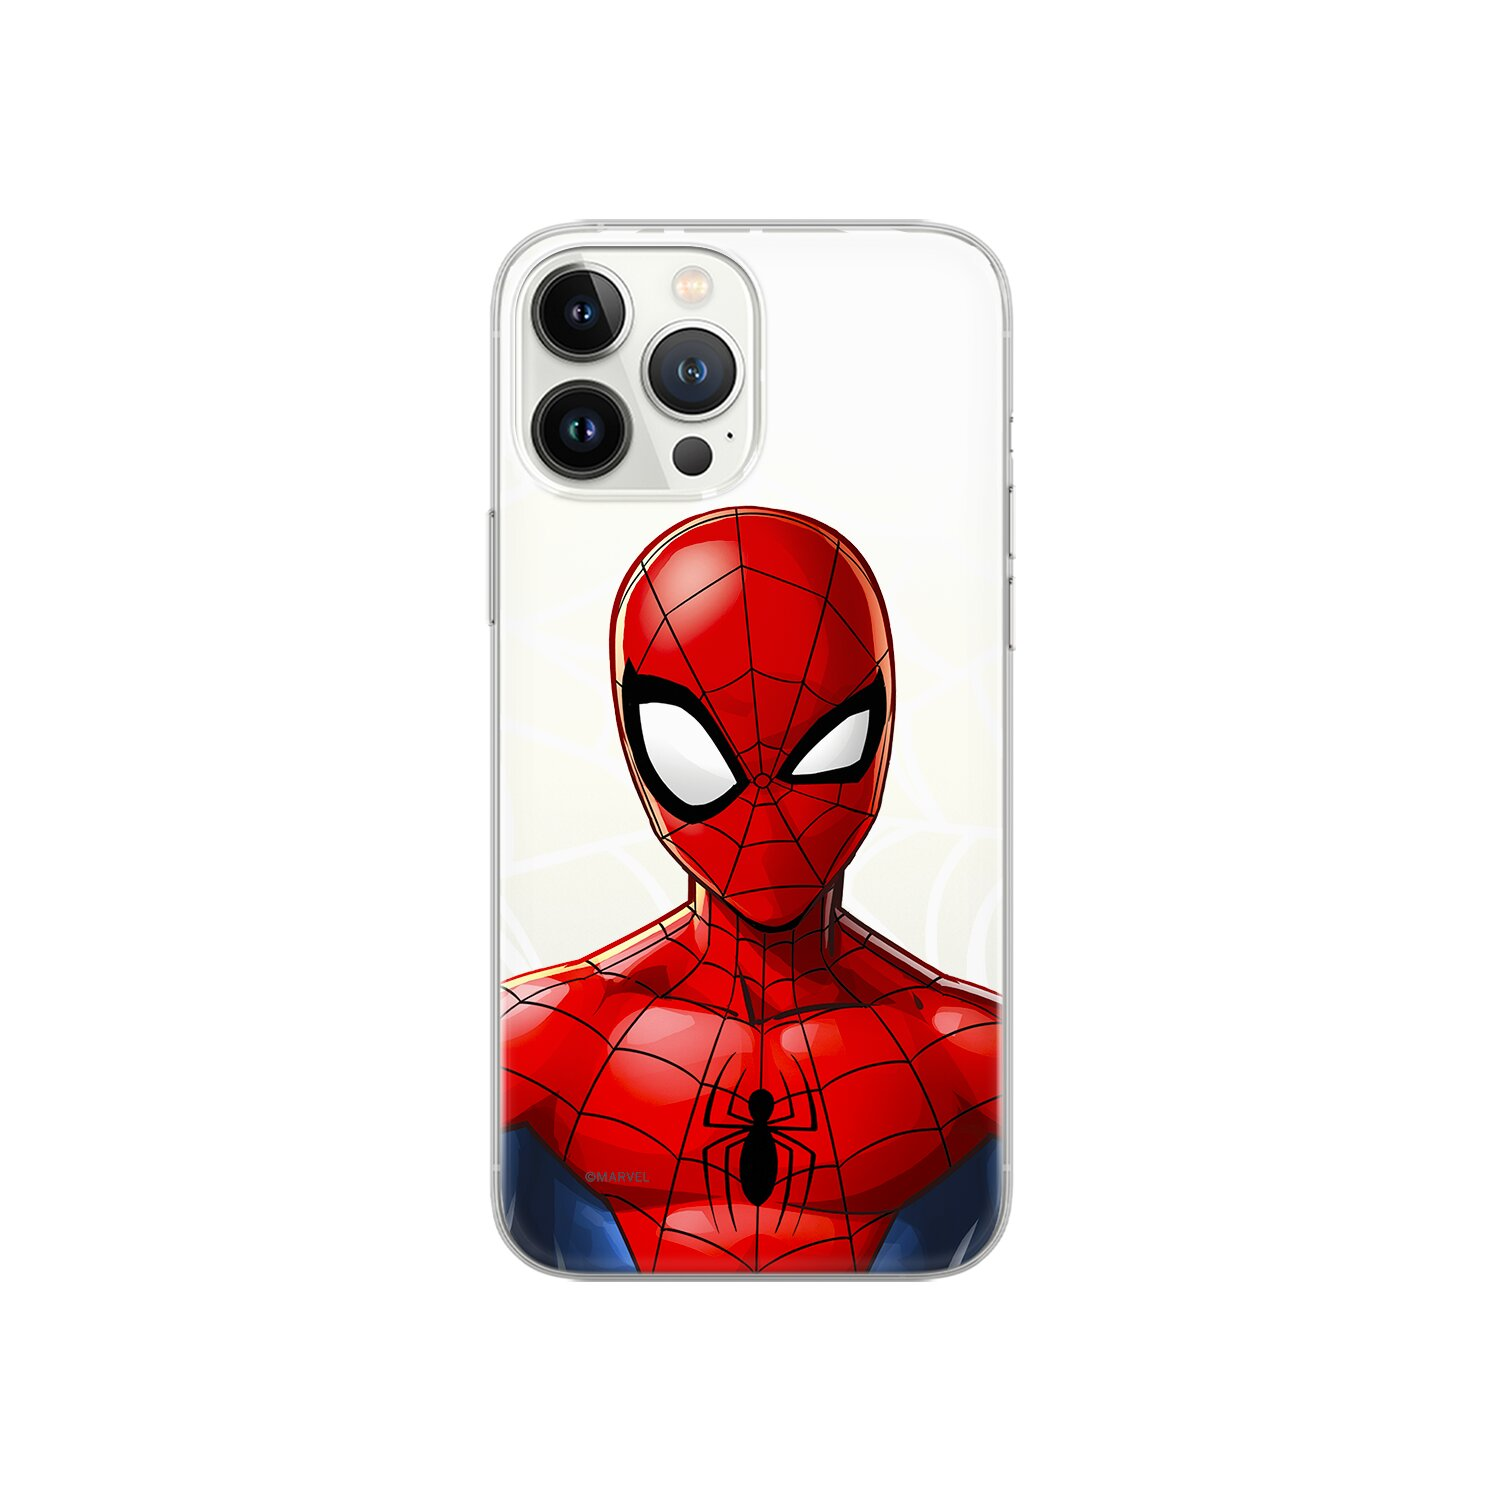 A52 Samsung, Transparent Spider MARVEL Galaxy Teildruck, 5G, 012 Backcover, Man